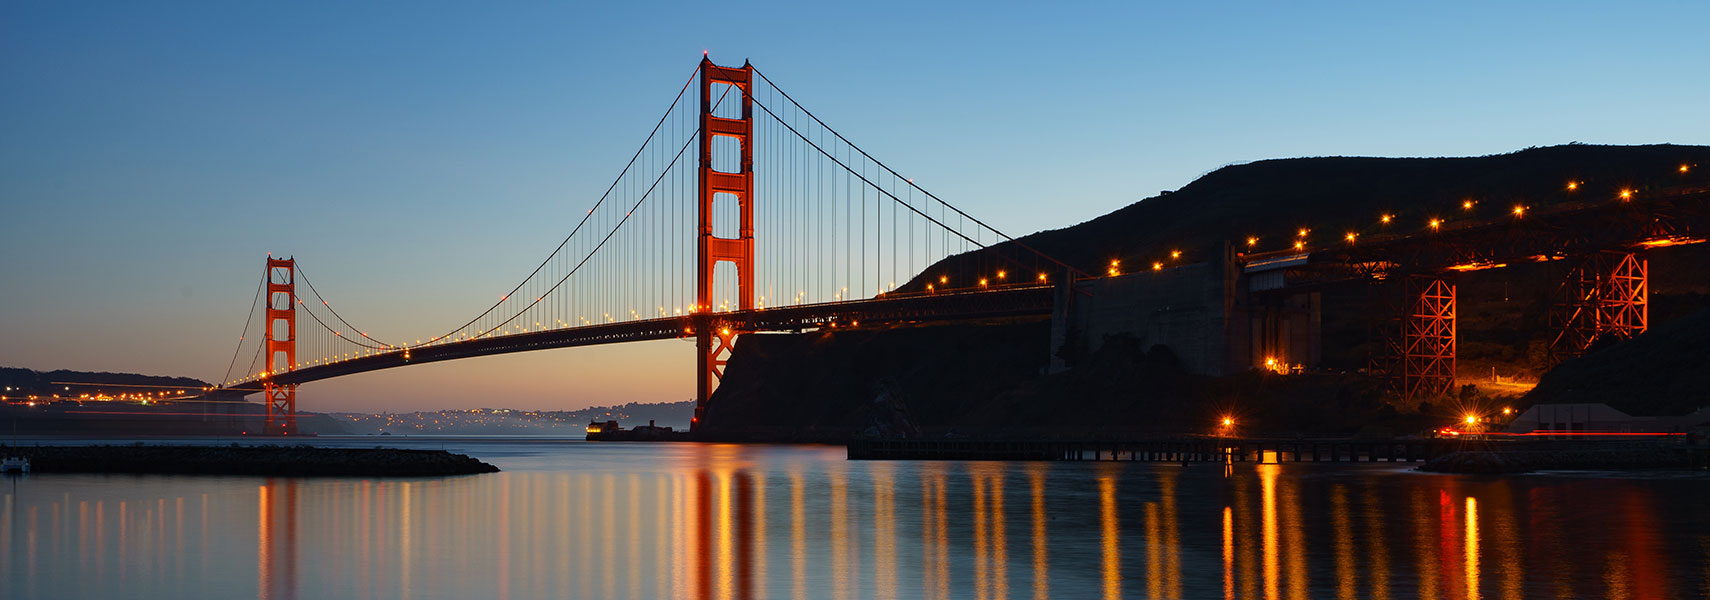 San Francisco Golden Gate Bridge over the Golden Gate strait